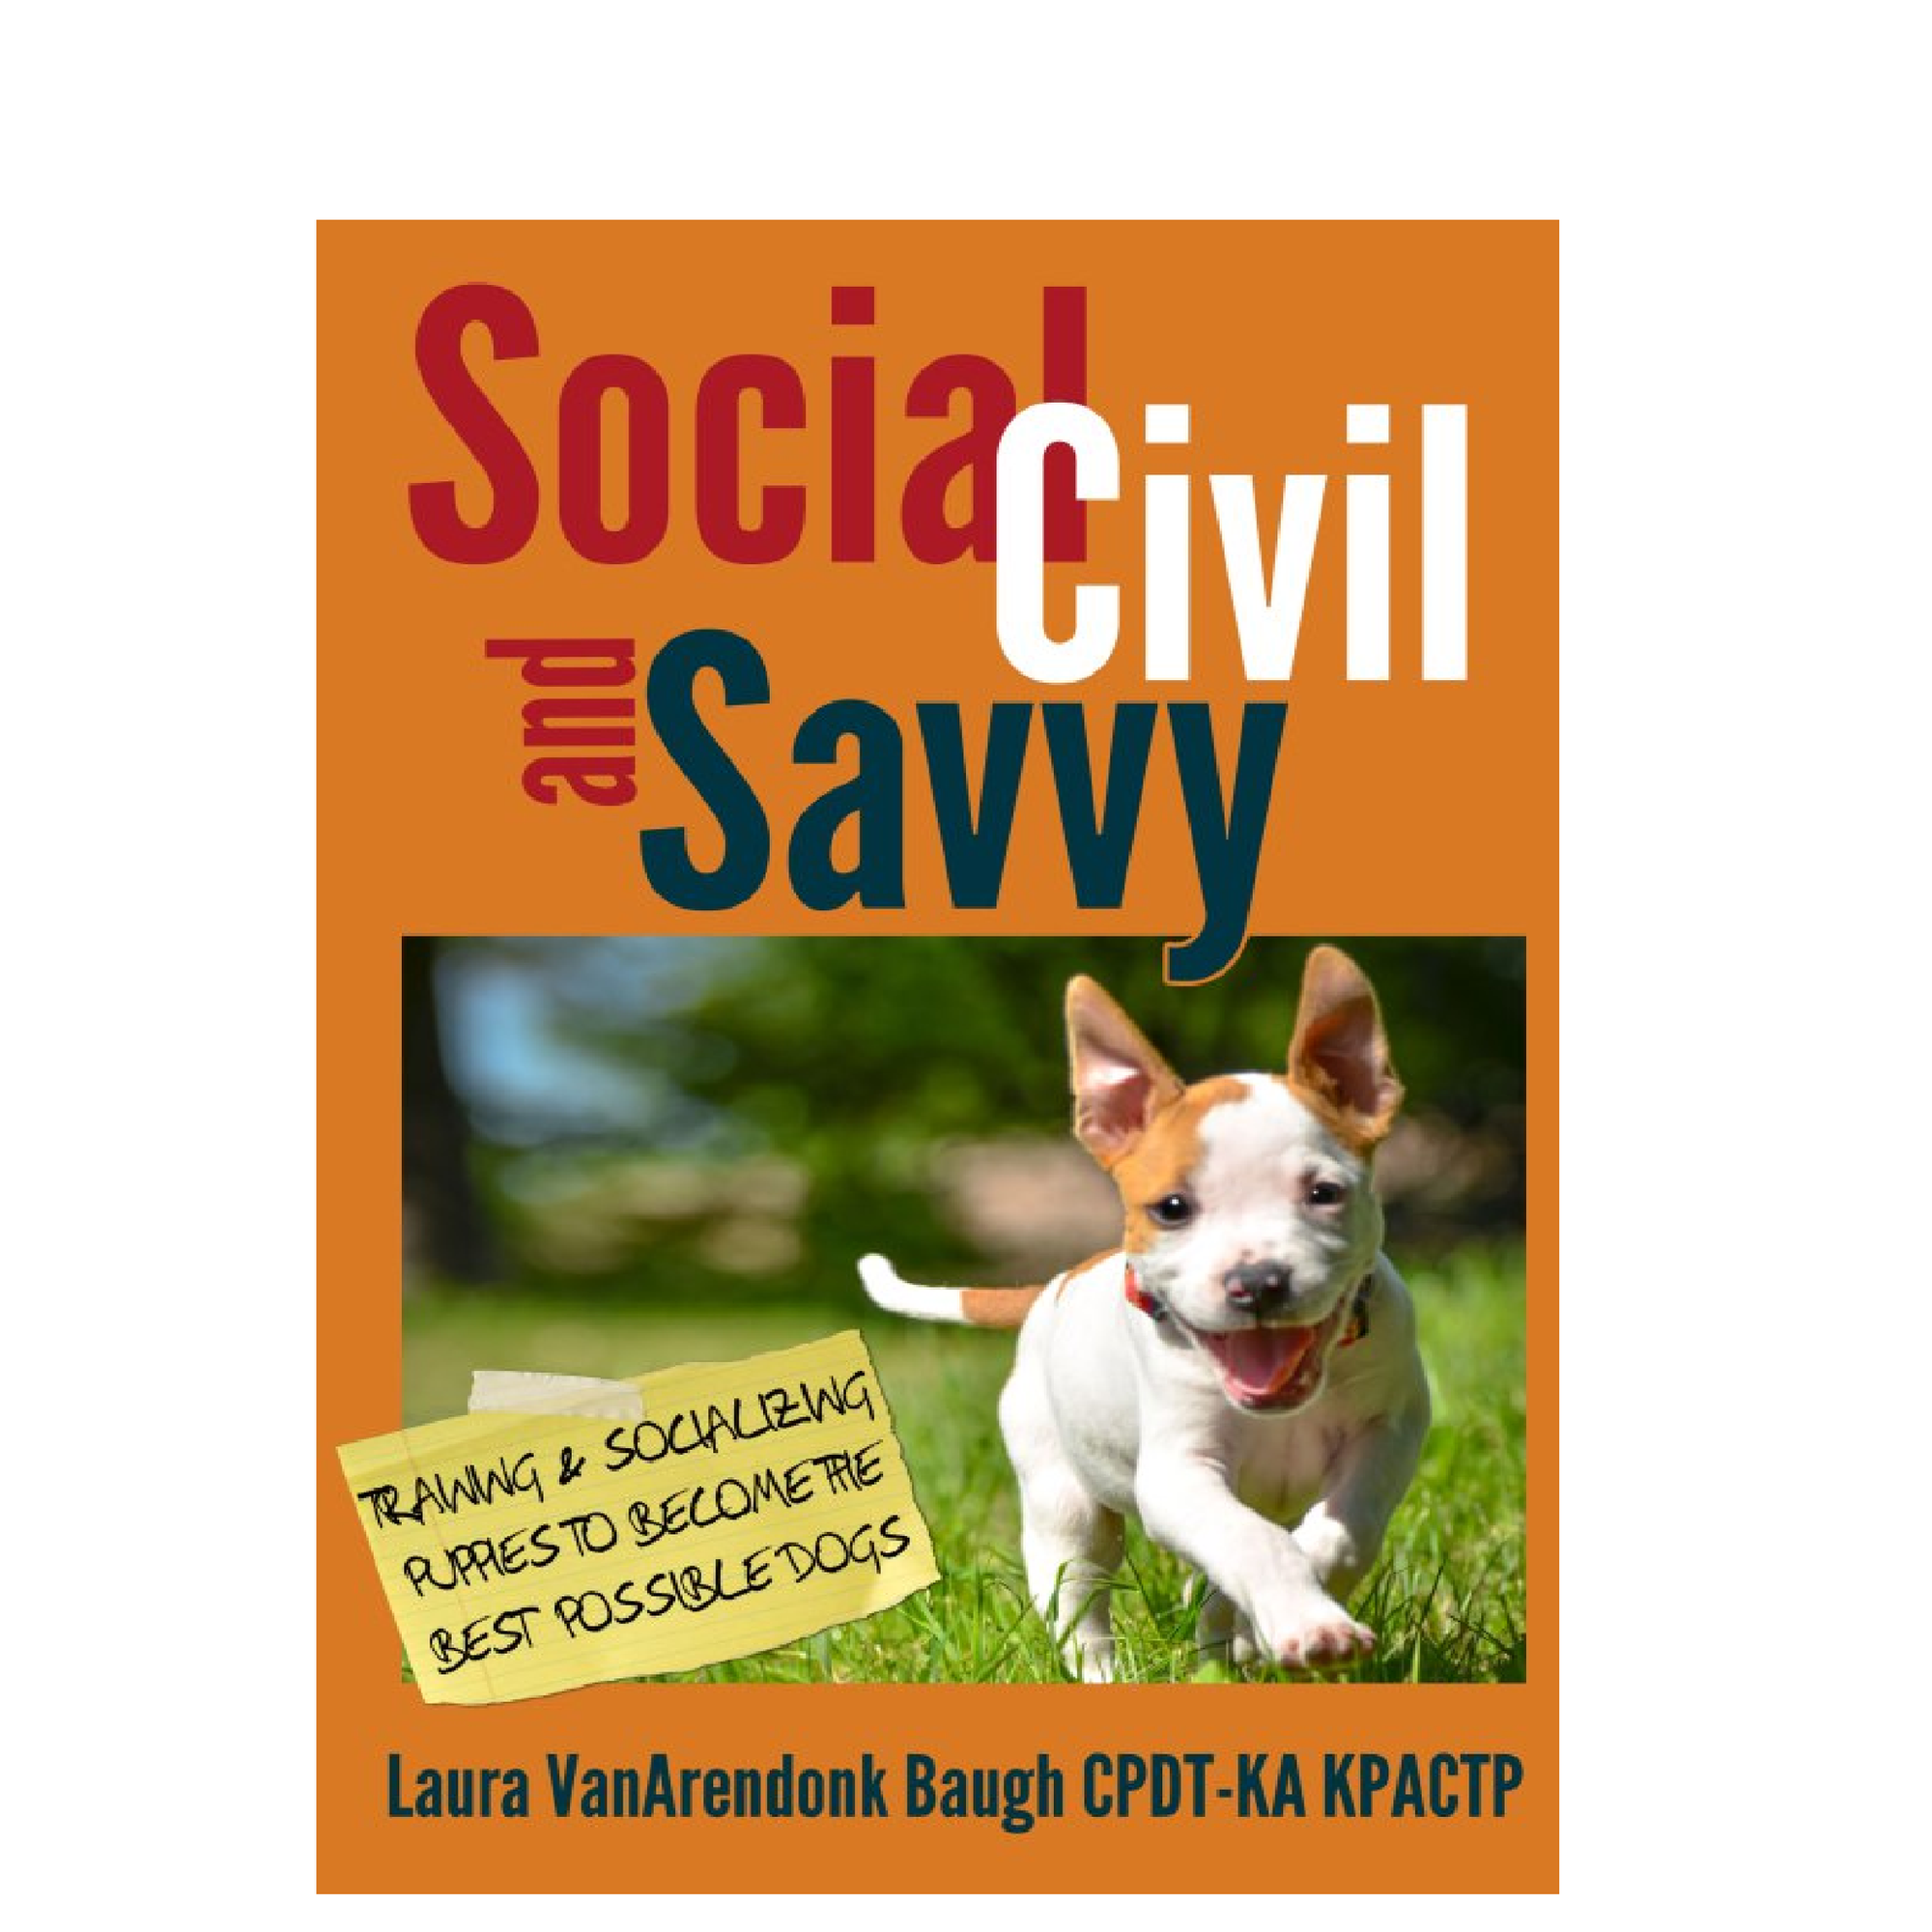 Social, Civil, and Savvy by Laura VanArendonk Baugh EXPO24